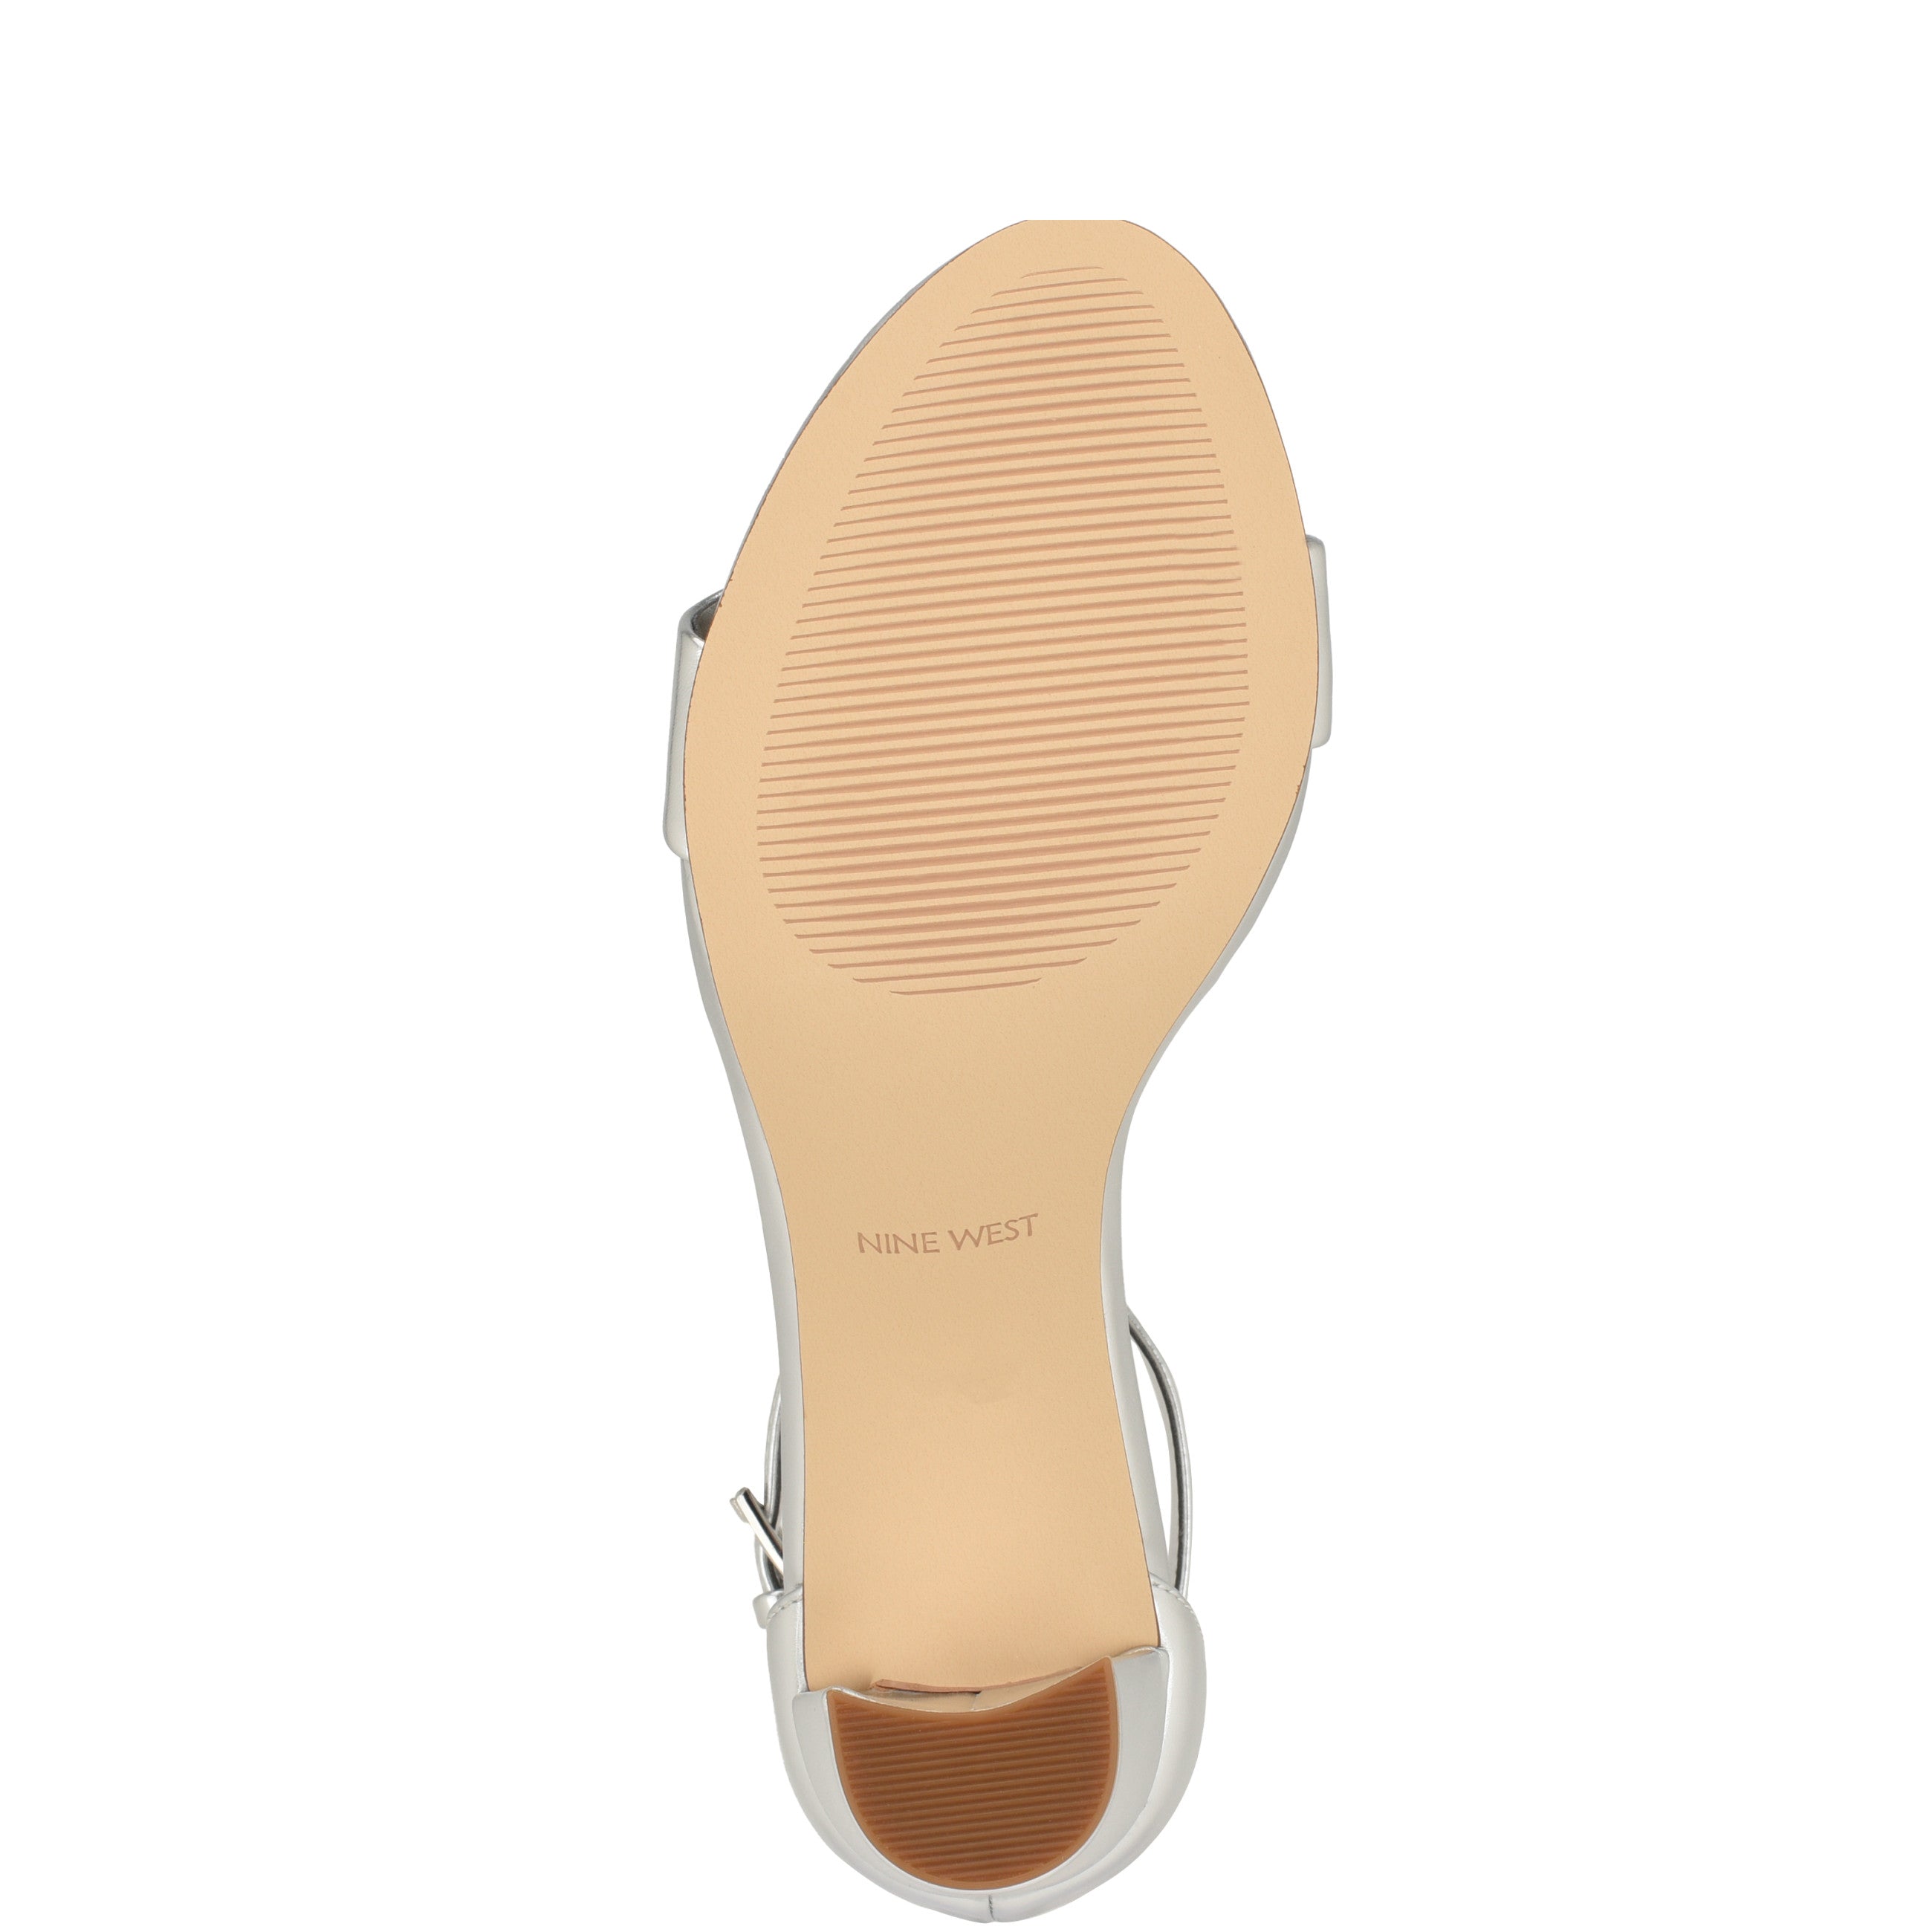 NWB Louis Vuitton strappy Horse Leg Heels sandals Sz 37,5